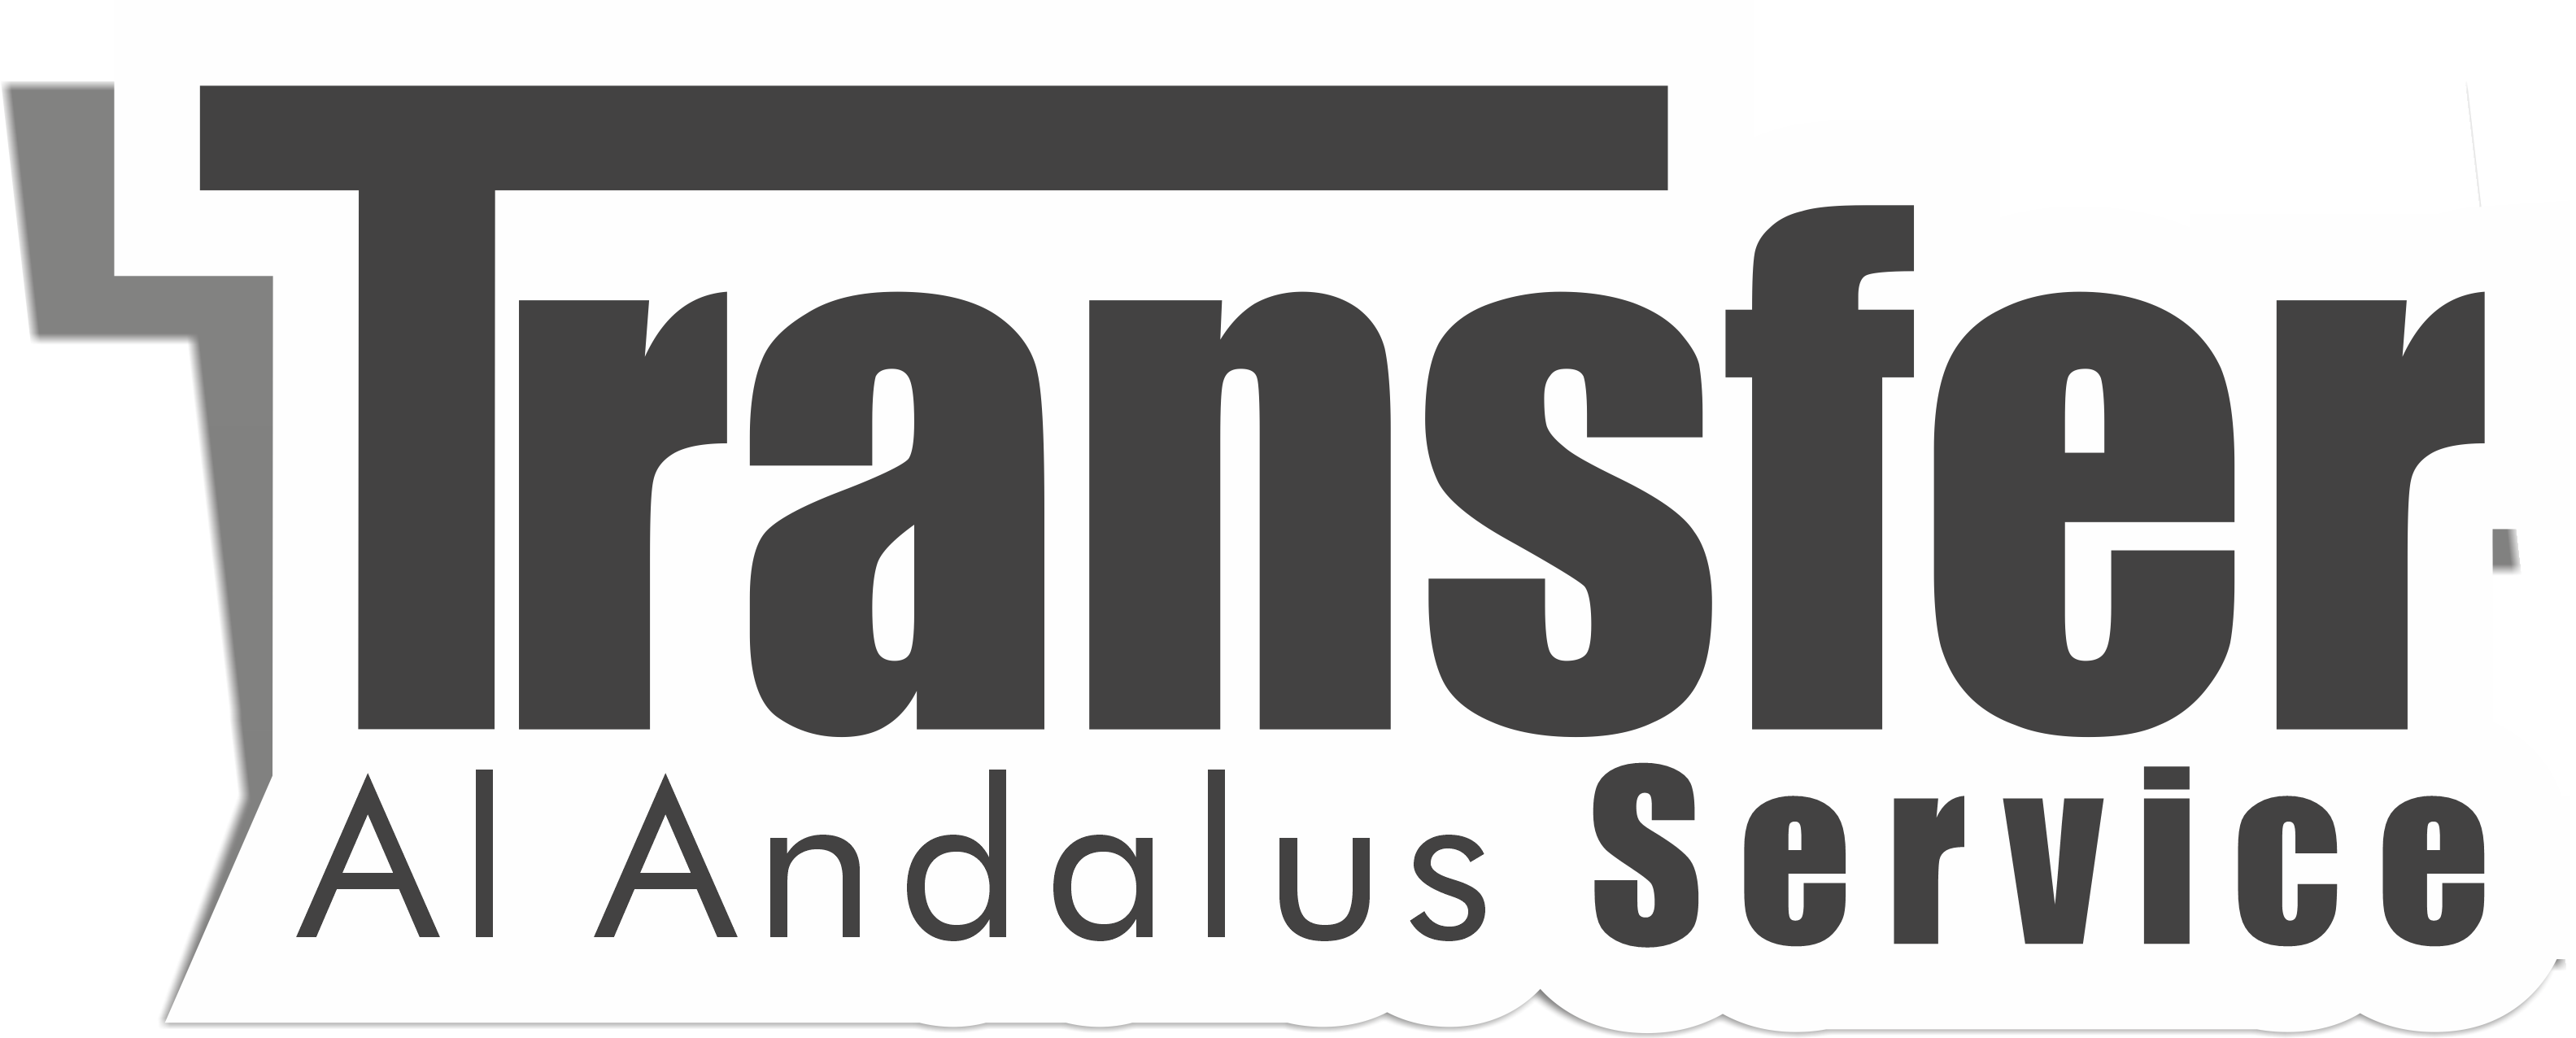 logo-transfer